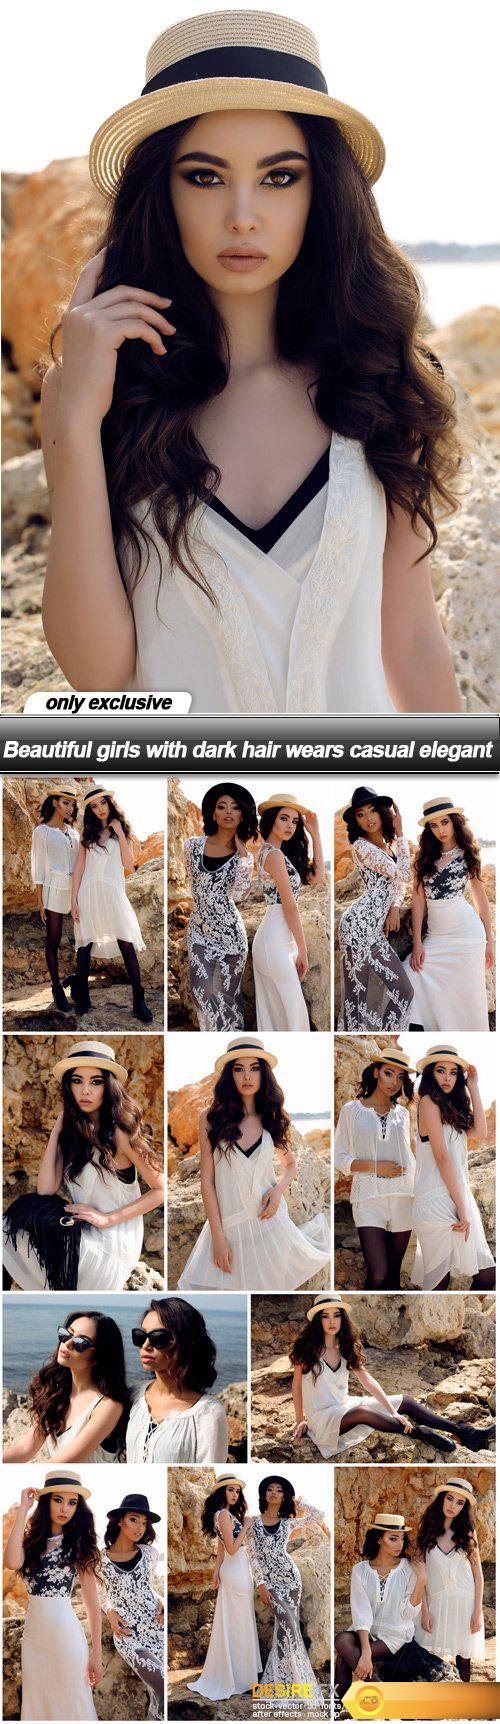 Beautiful girls with dark hair wears casual elegant - 12 UHQ JPEG